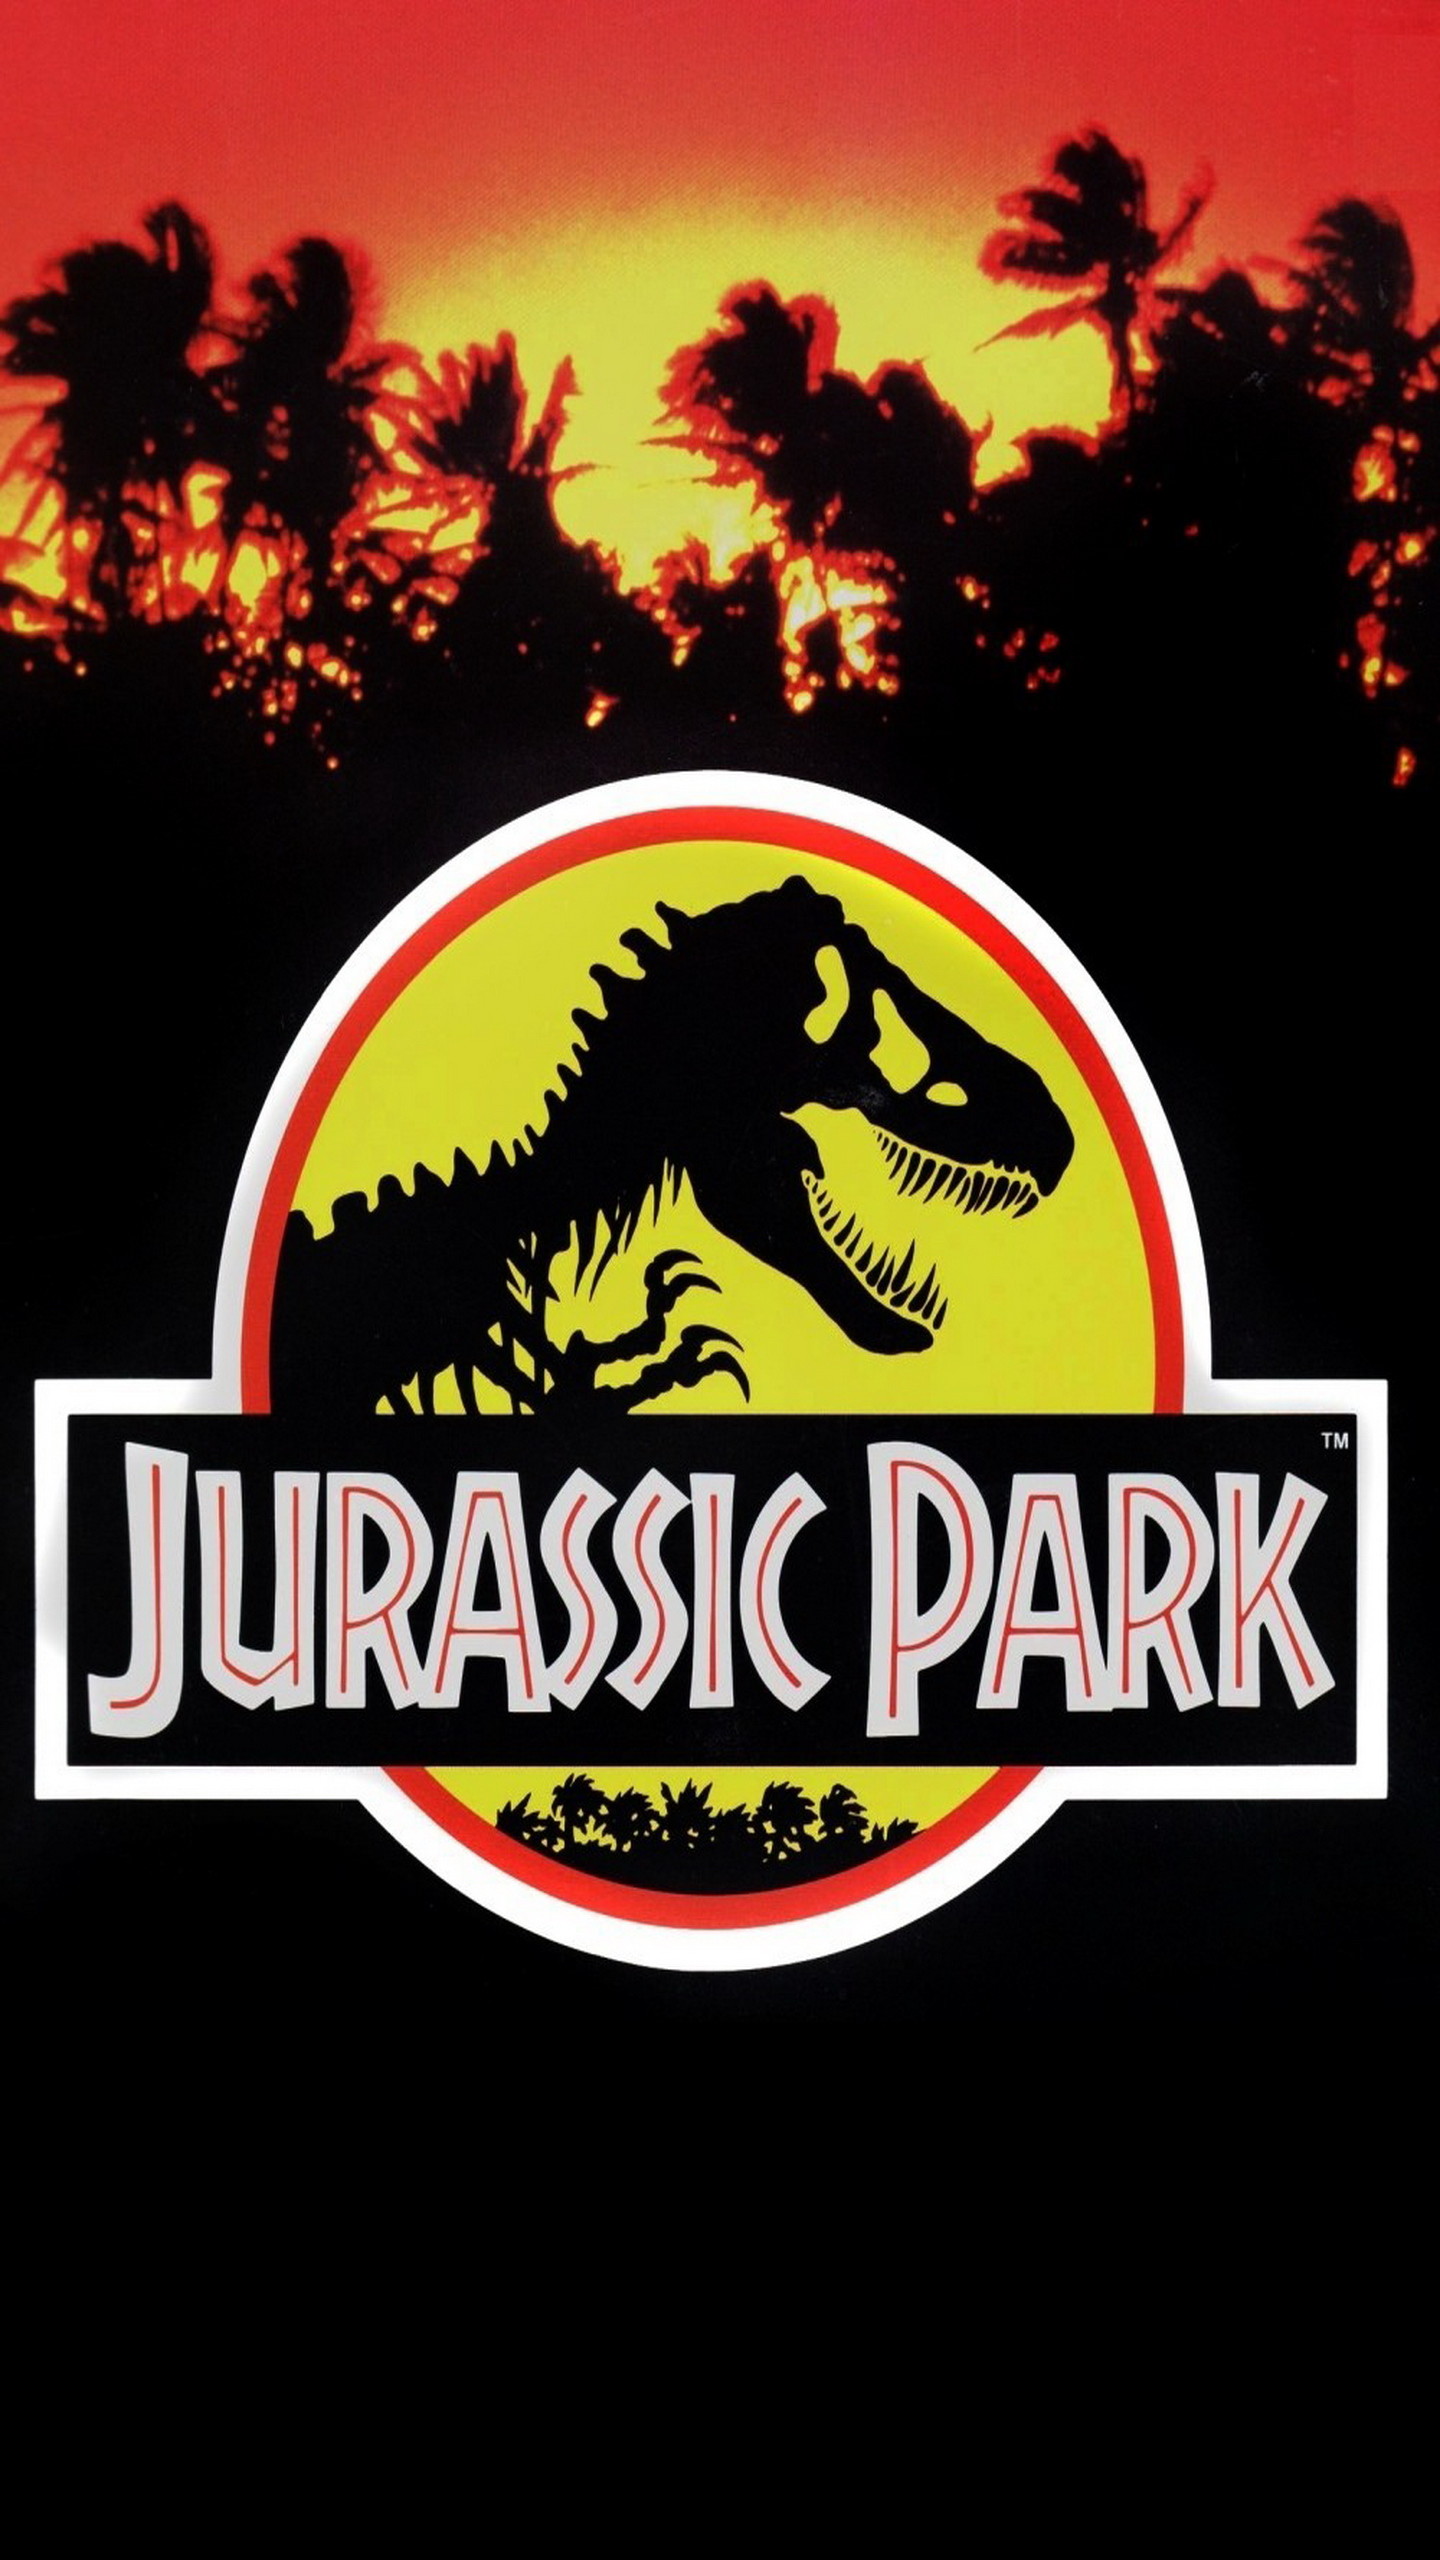 Jurassic Park Wallpaper iPhone (70+ images)